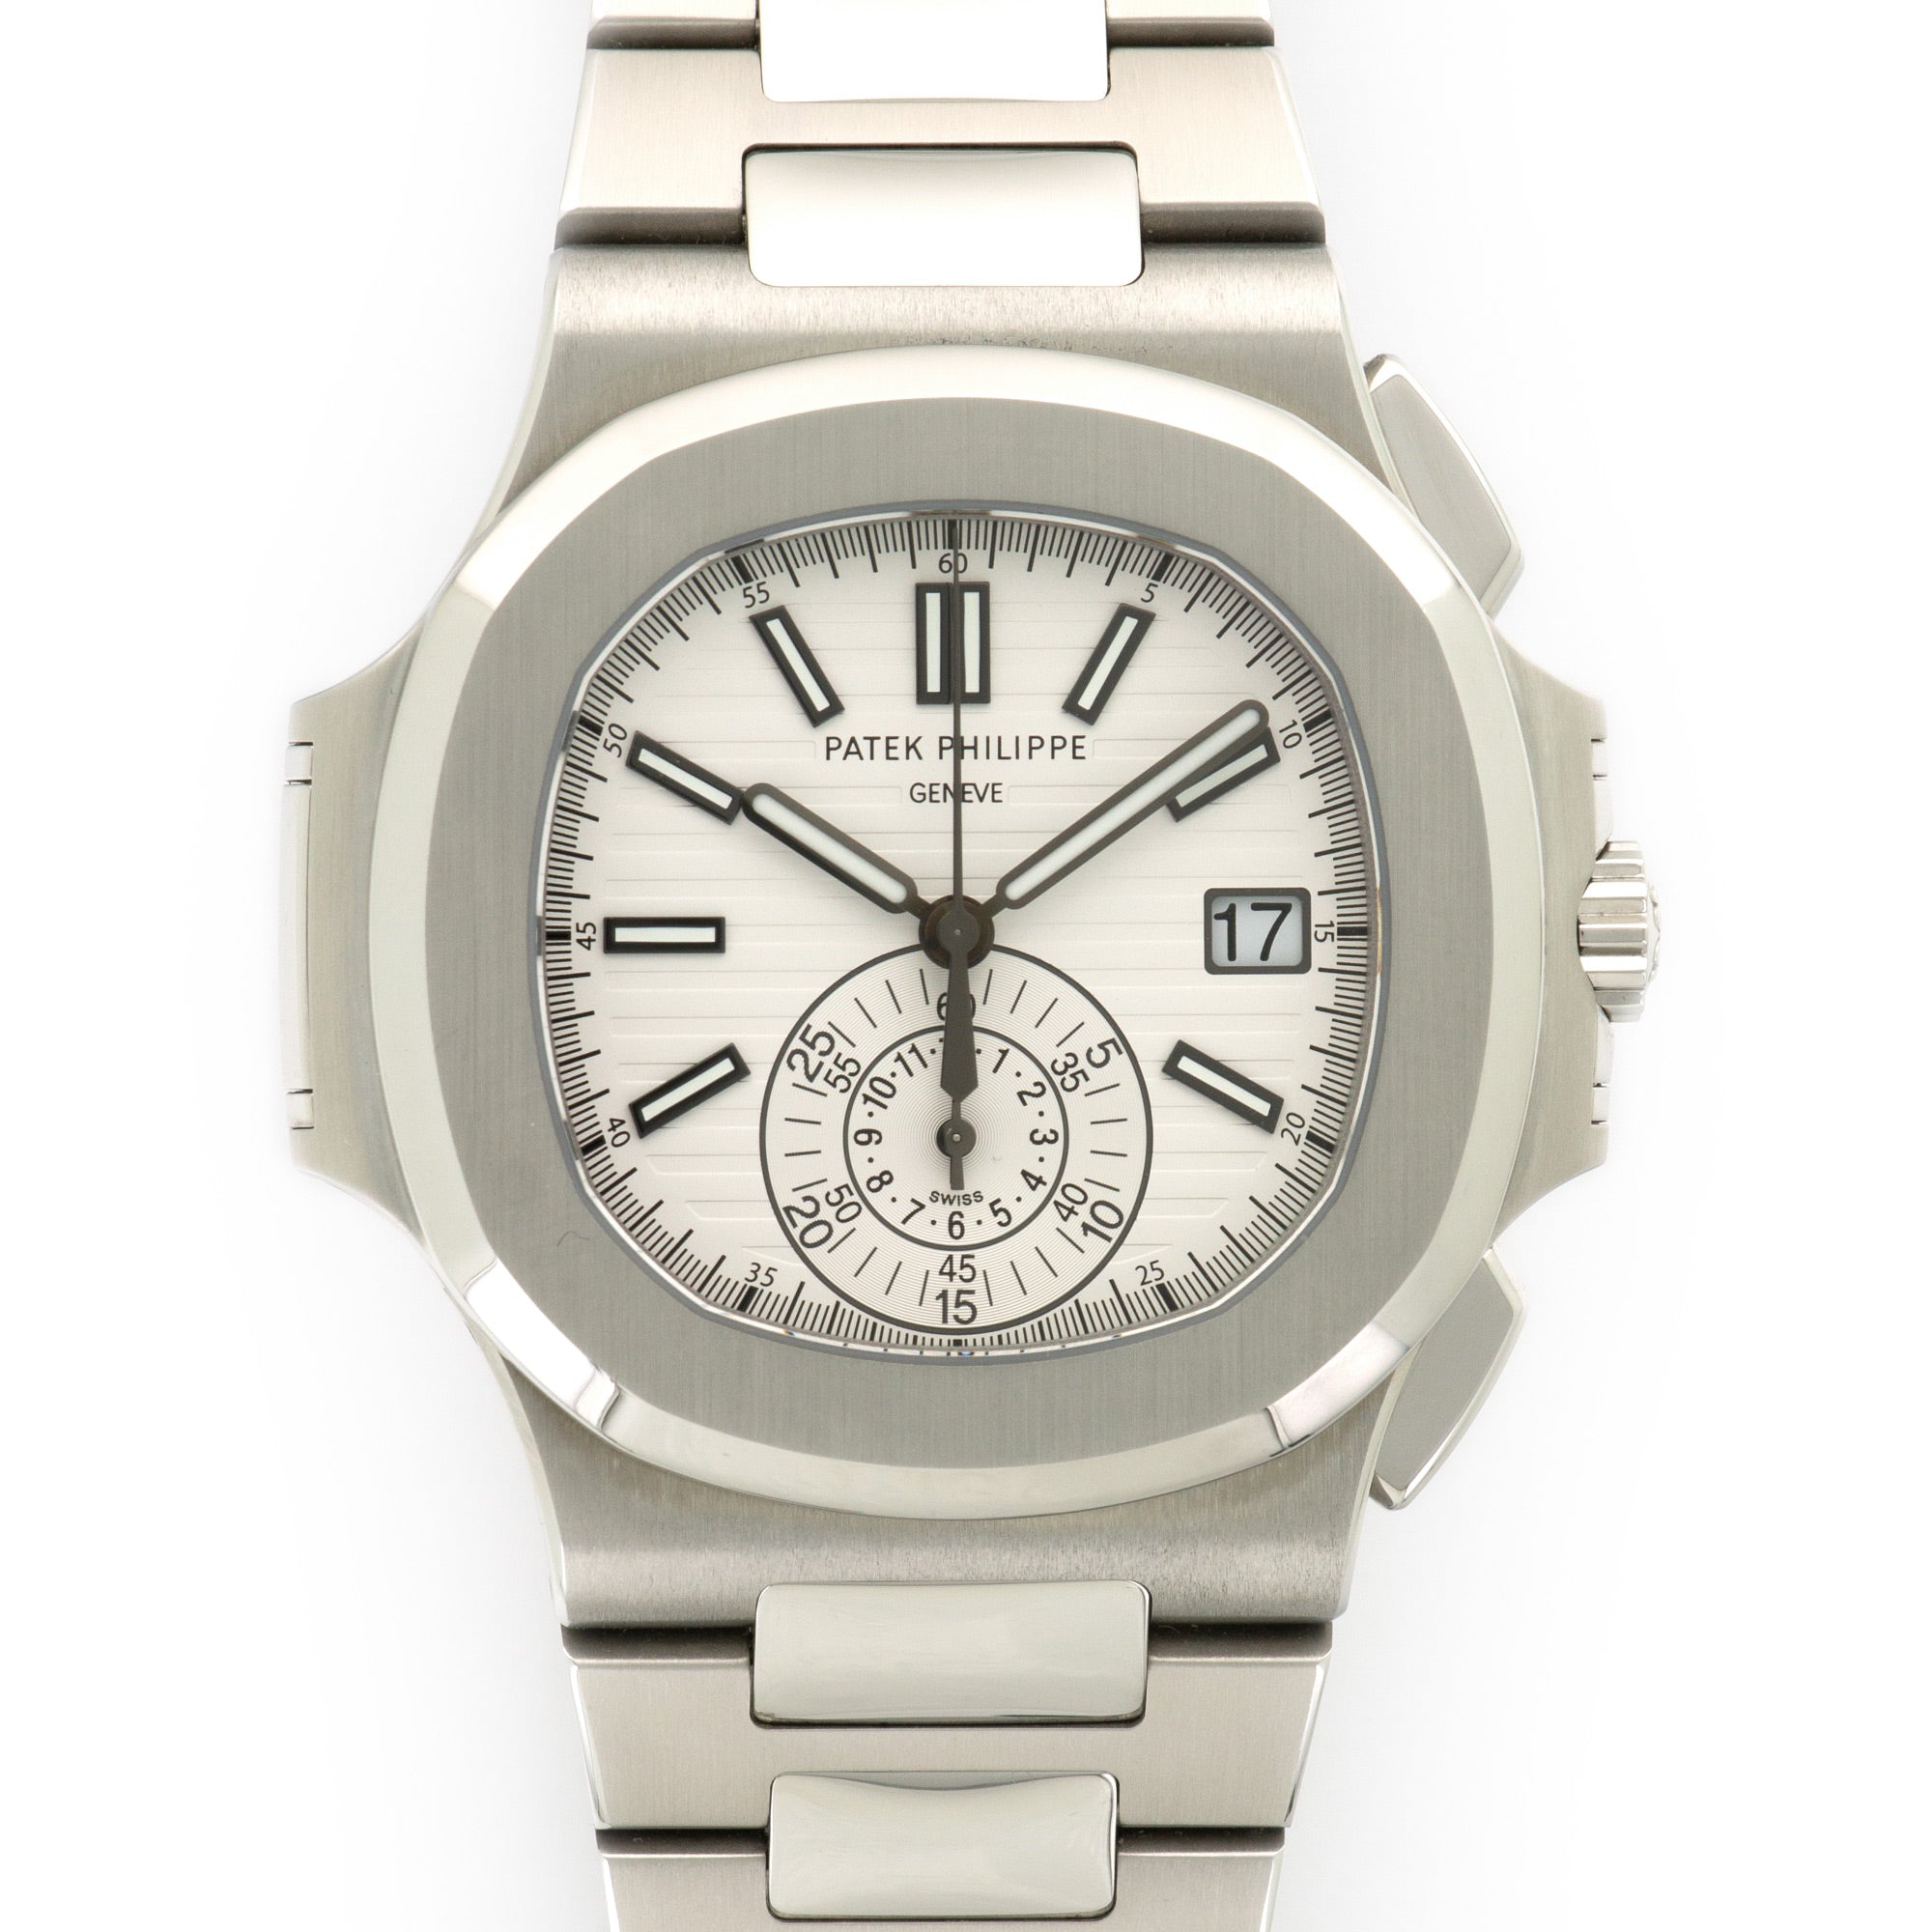 Patek Philippe - Patek Philippe Nautilus Chronograph Watch Ref. 5980 - The Keystone Watches